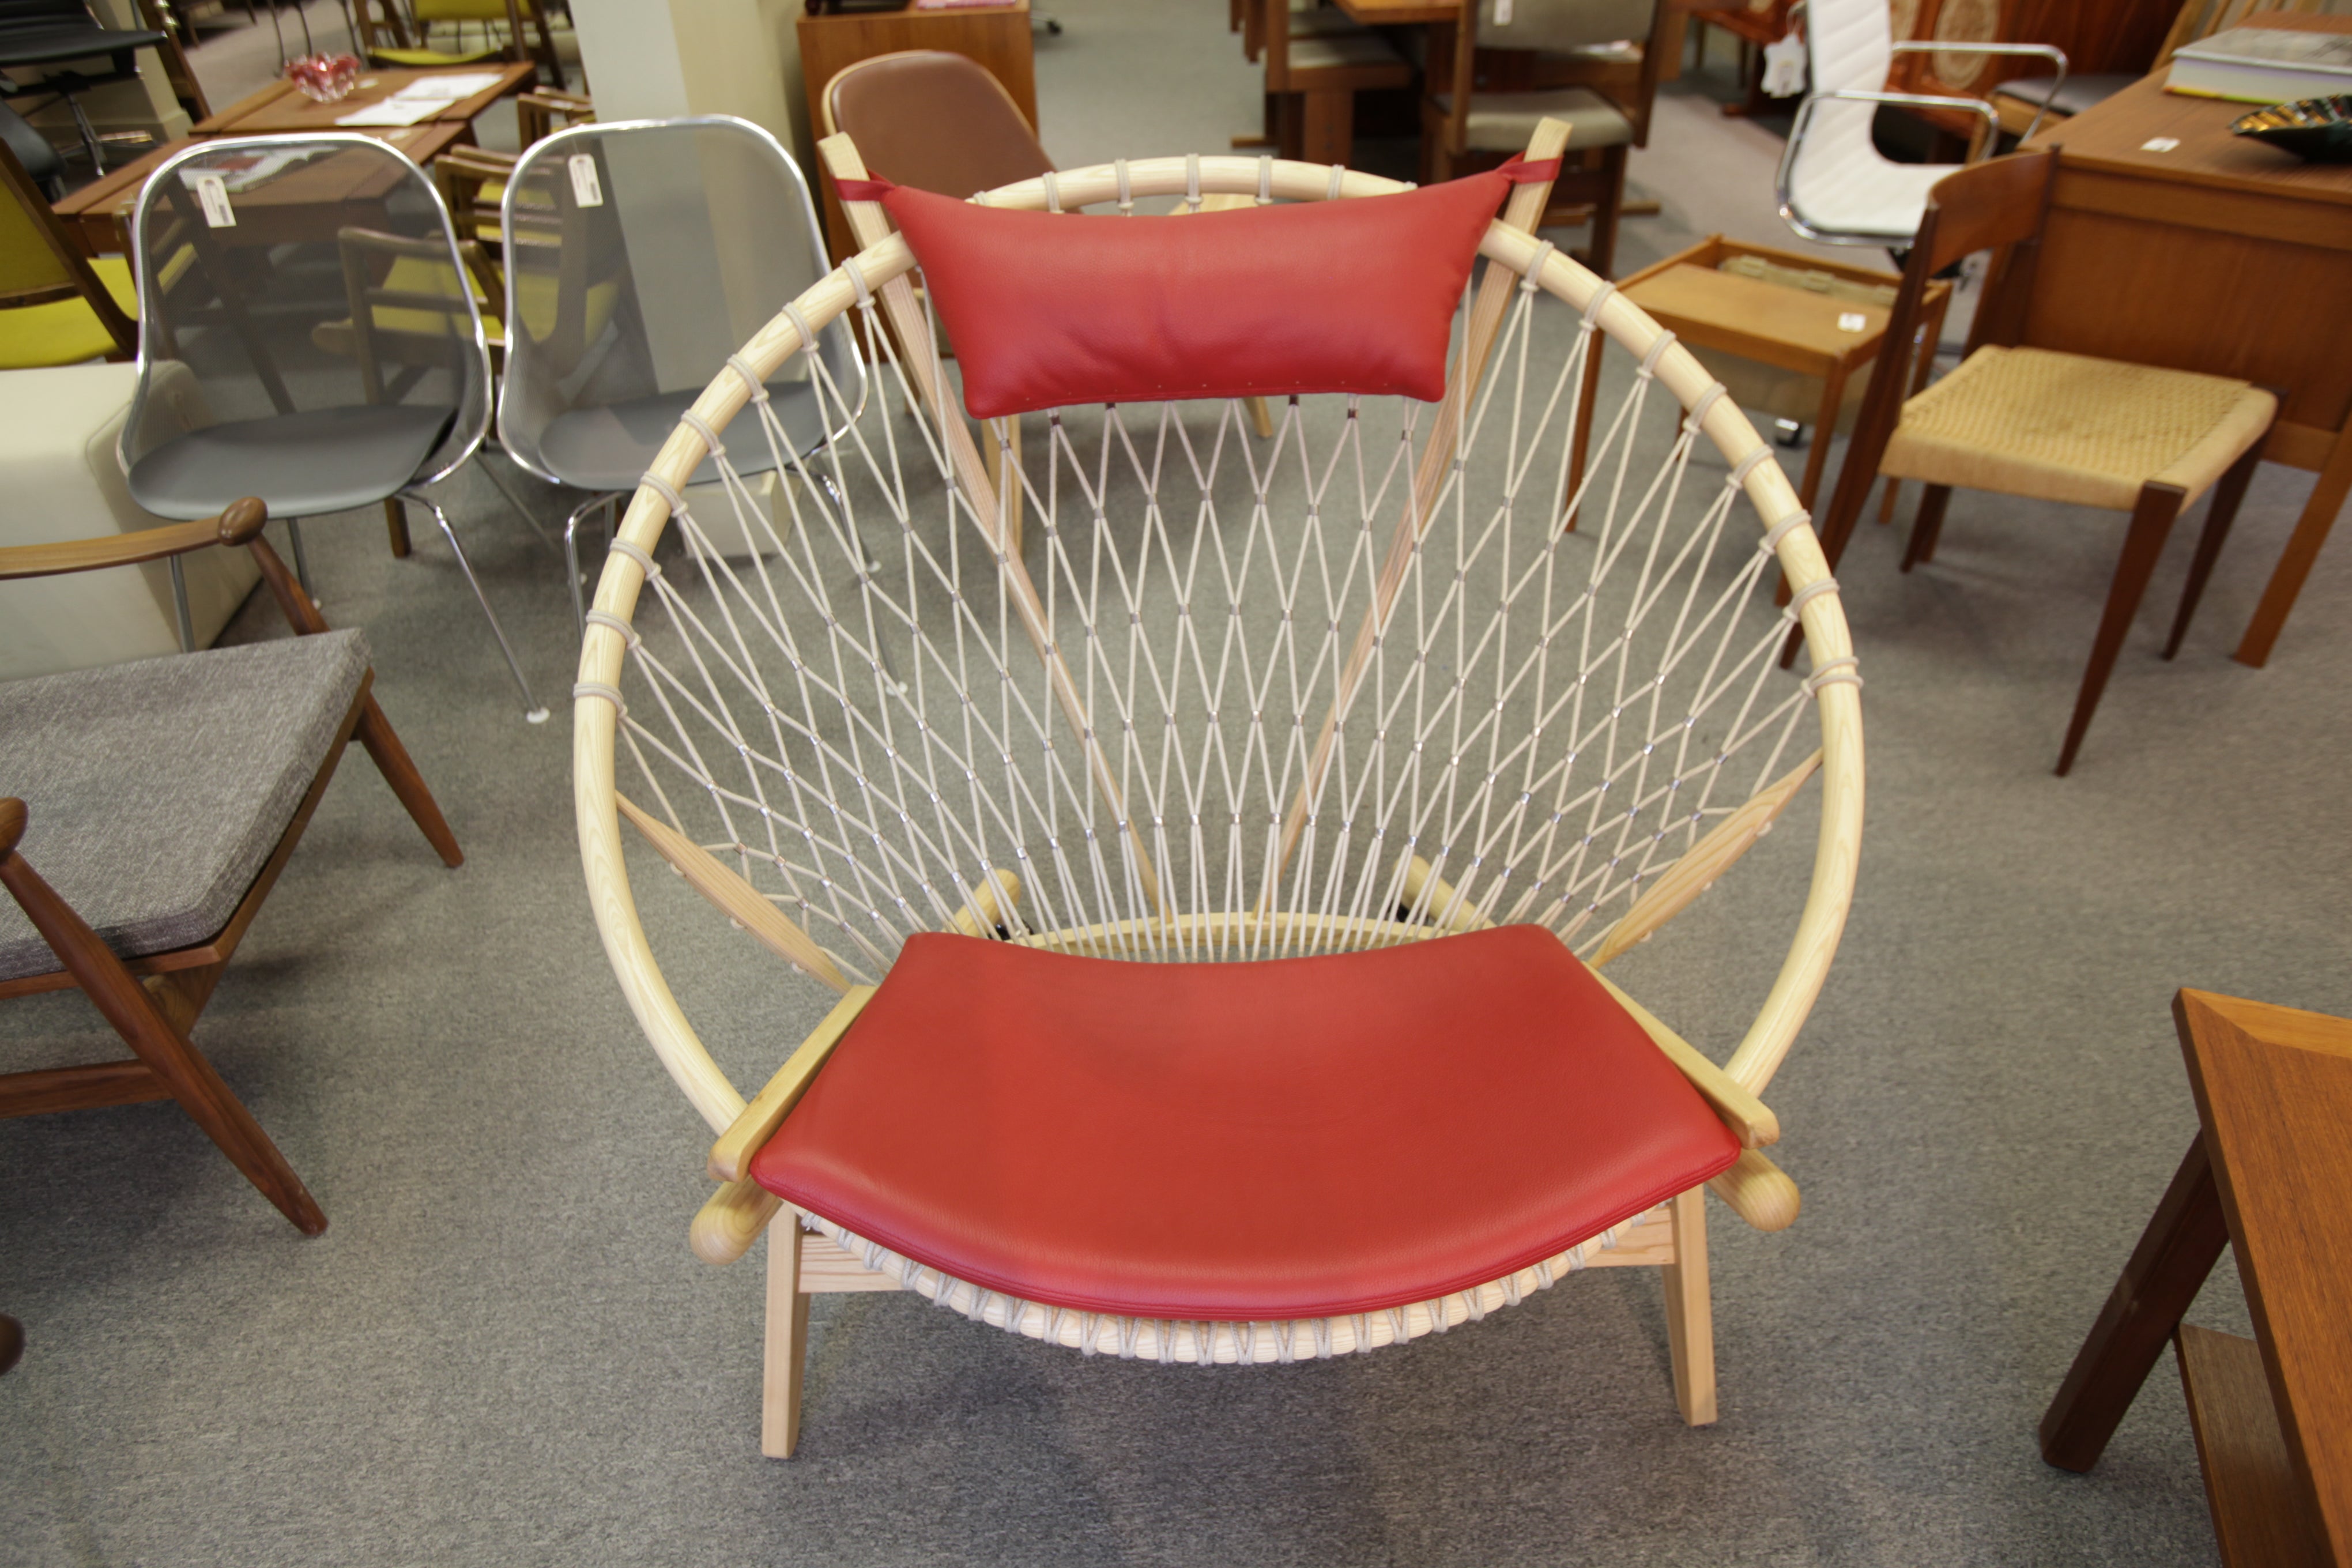 High Quality Hans Wegner Circle Chair Replica (Red Leather) (45"W x 38"H x 36"D)